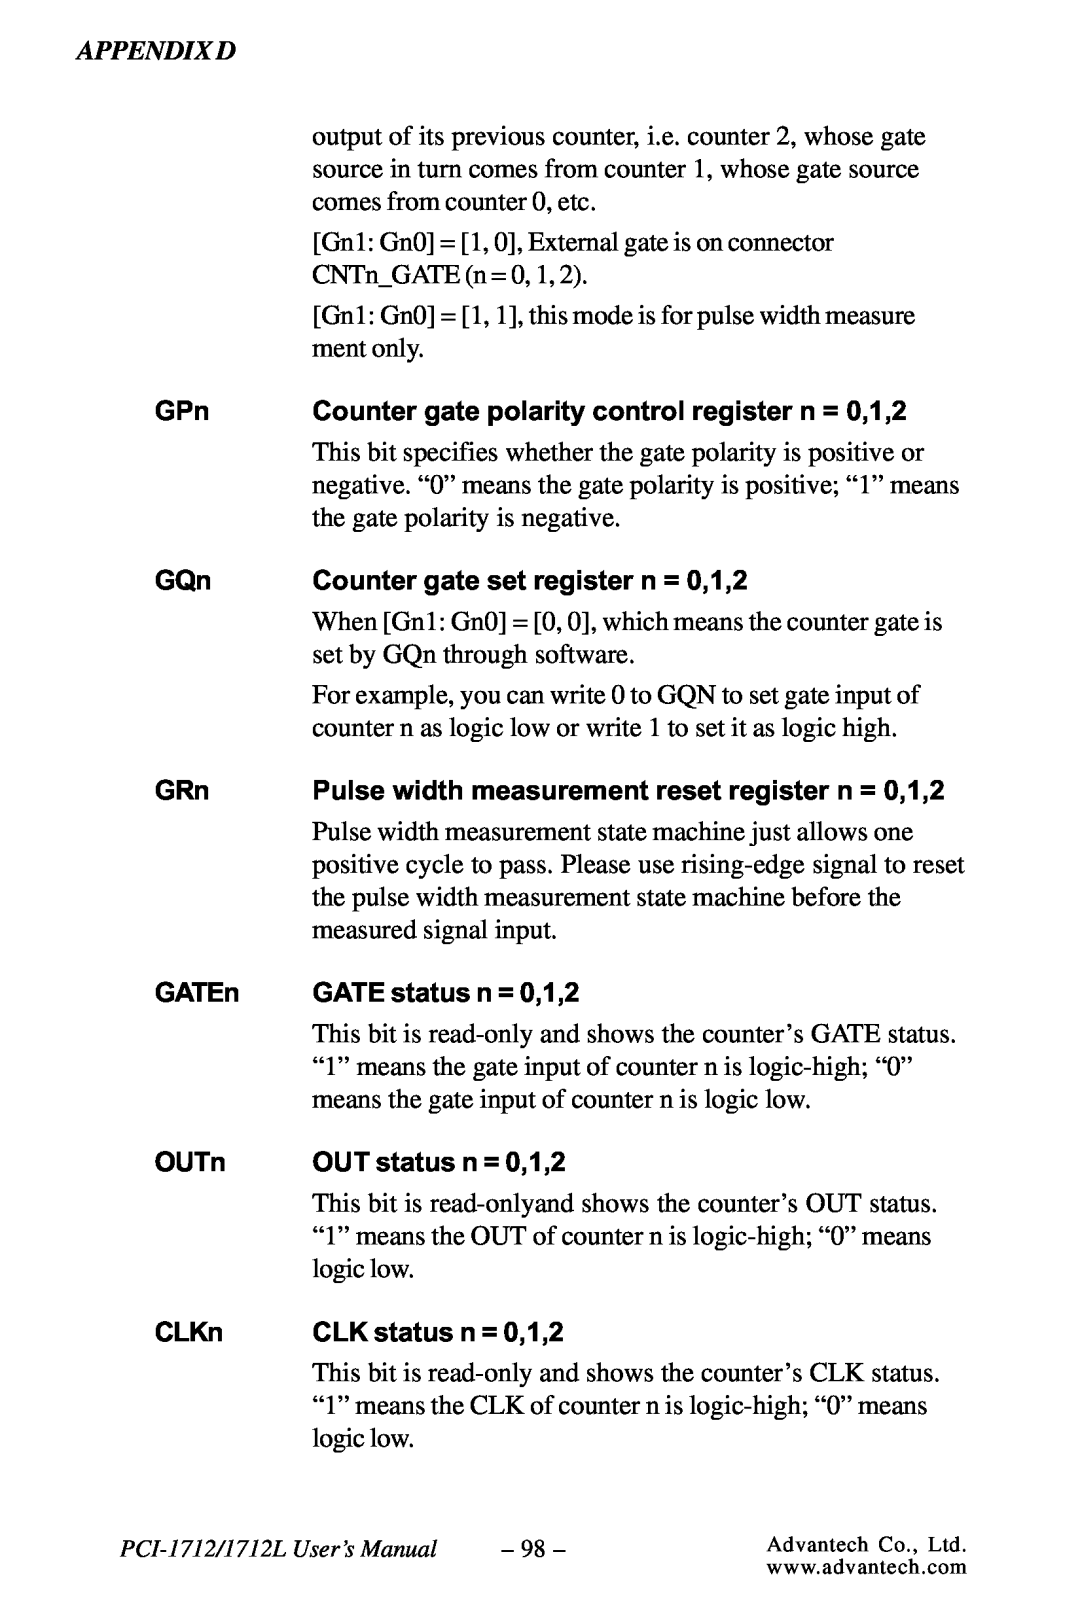 Konica Minolta PCI-1712L user manual Counter gate polarity control register n = 0,1,2 